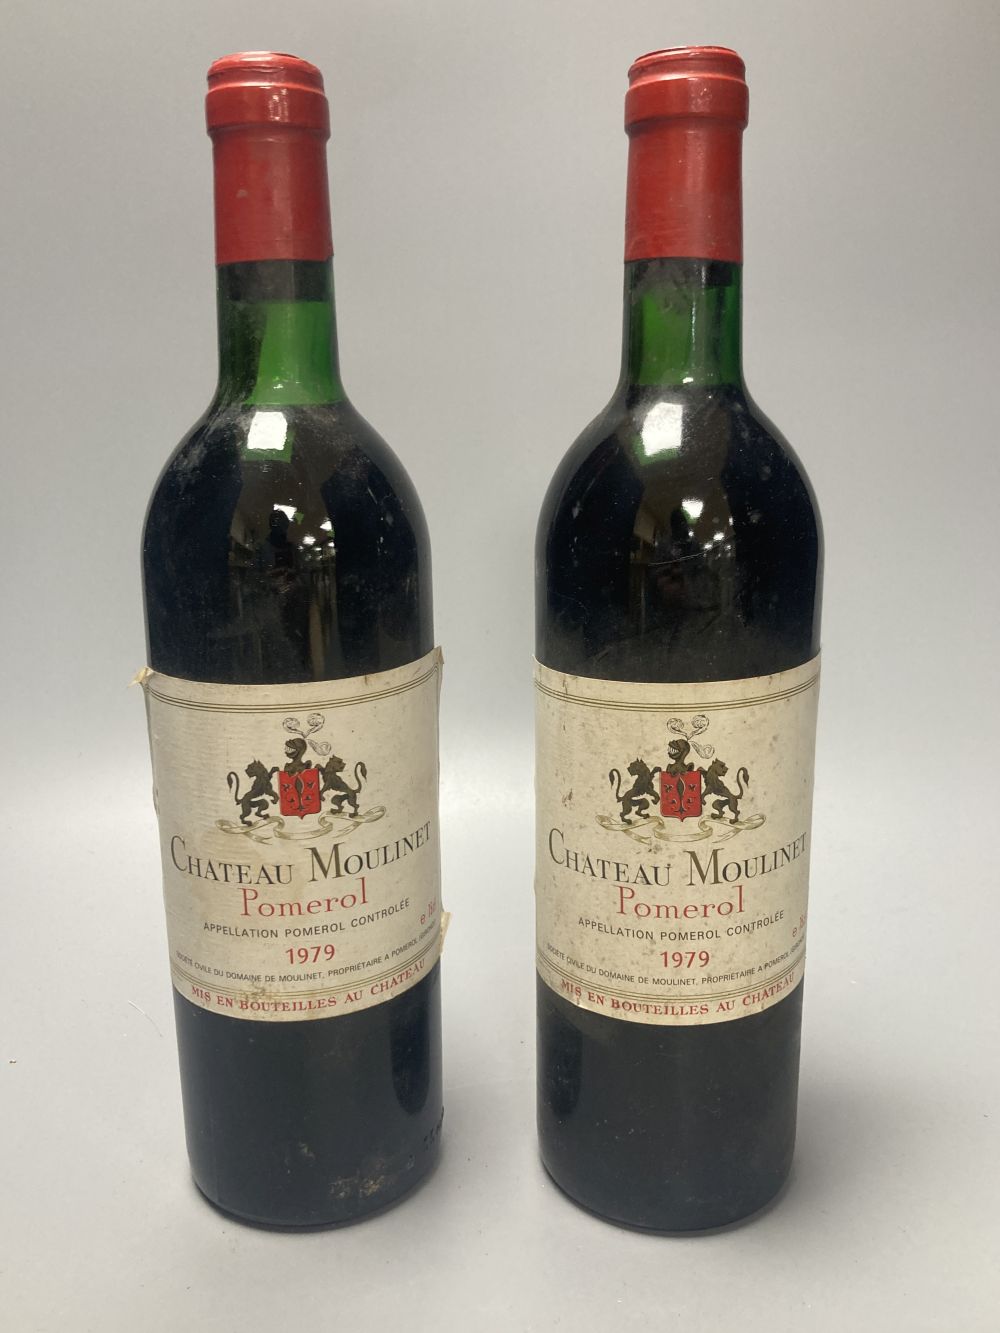 Two bottles of Chateau Moulinet Pomerol 1979